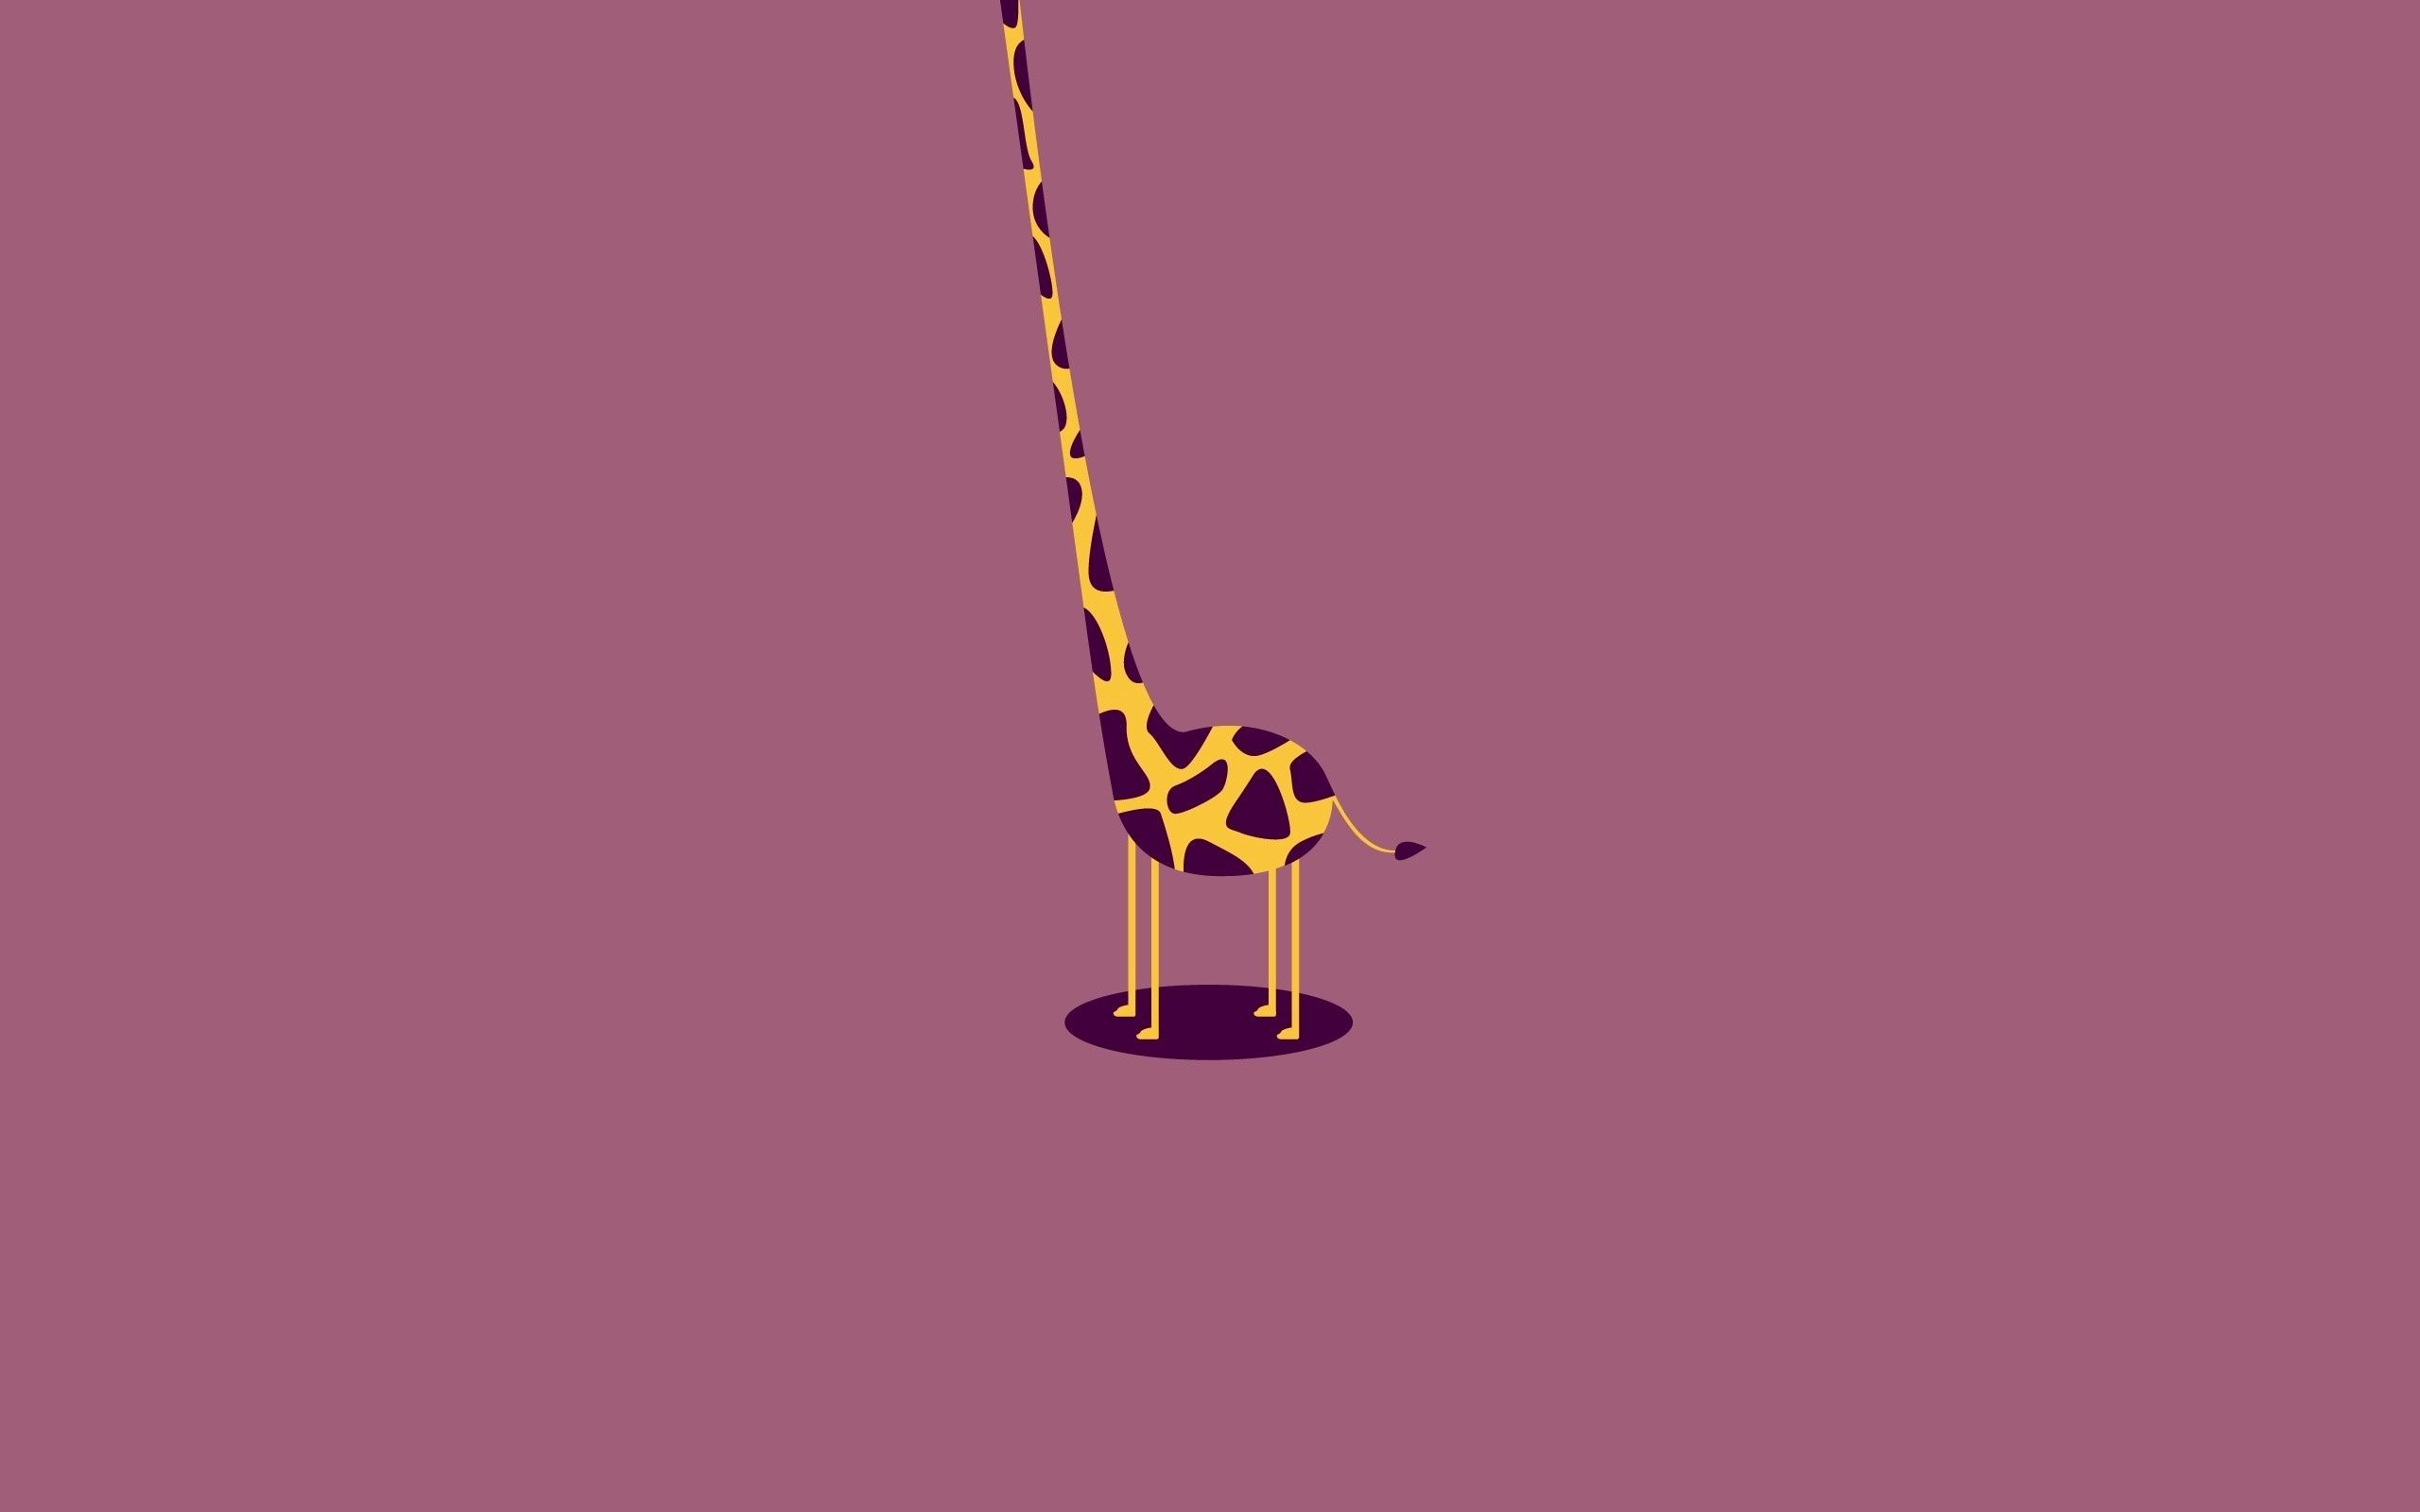 63617 Hintergrundbild herunterladen vektor, giraffe, körper, hals, torso, kopflos, headless - Bildschirmschoner und Bilder kostenlos